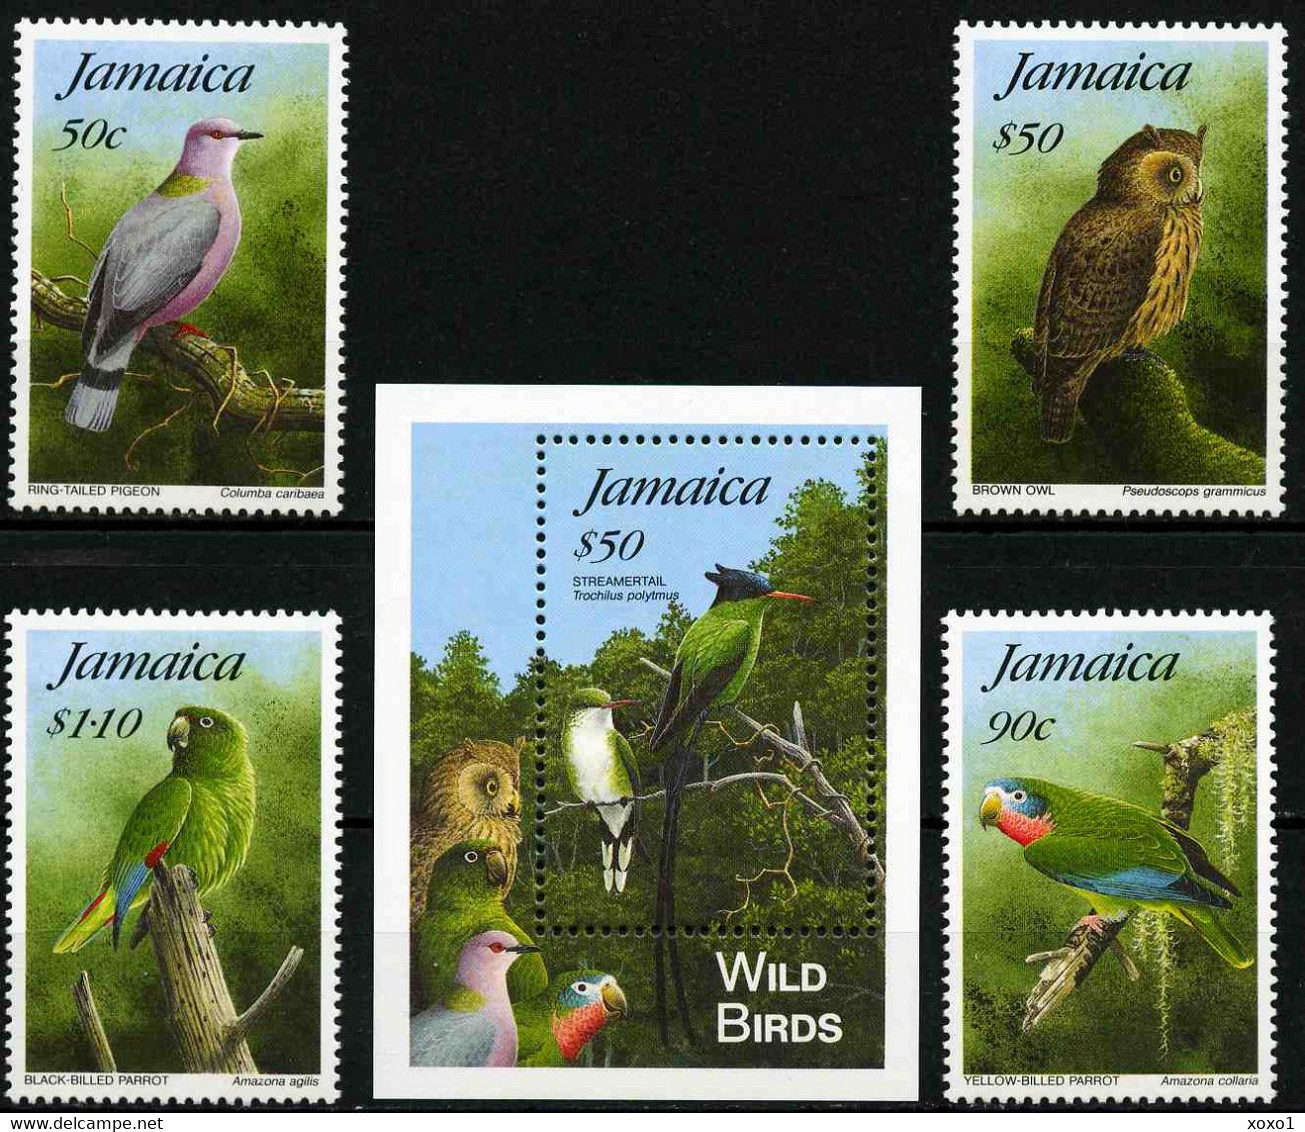 Jamaica 1995 MiNr. 852 - 855(Block 42) Jamaika Birds 4v+1bl MNH** 21,00 € - Eulenvögel